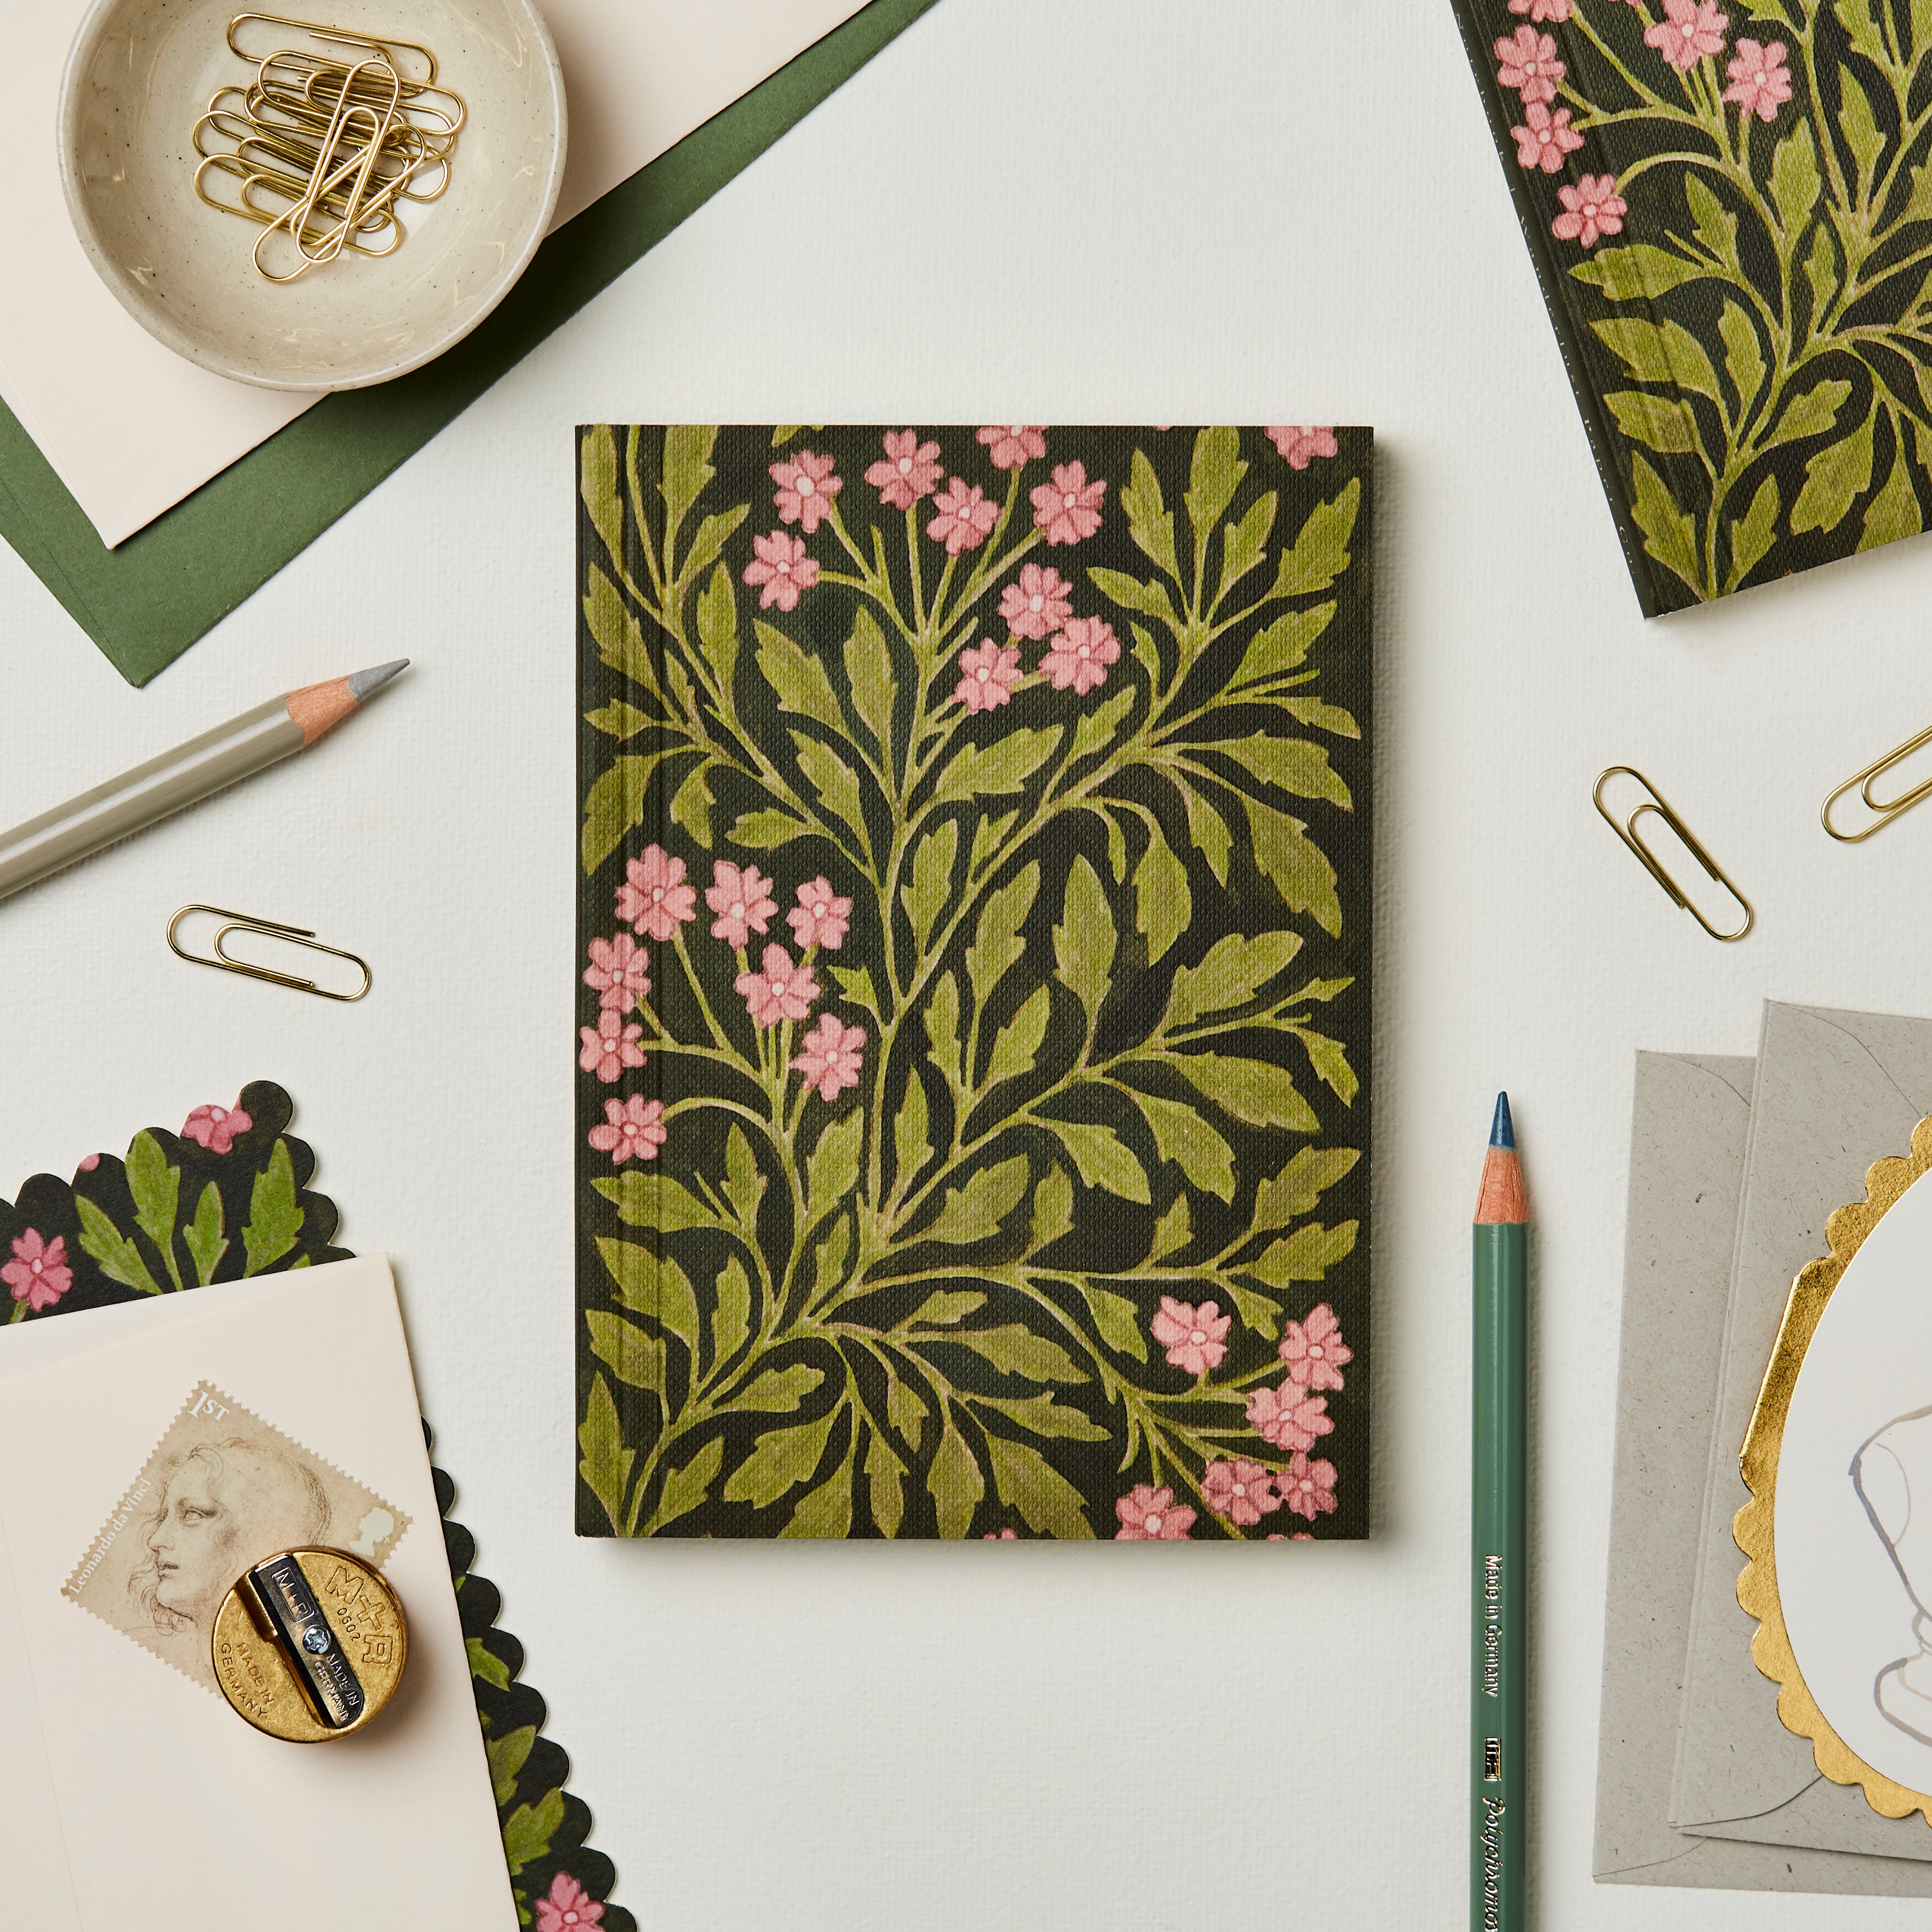 Green Flora Pocket Notebook